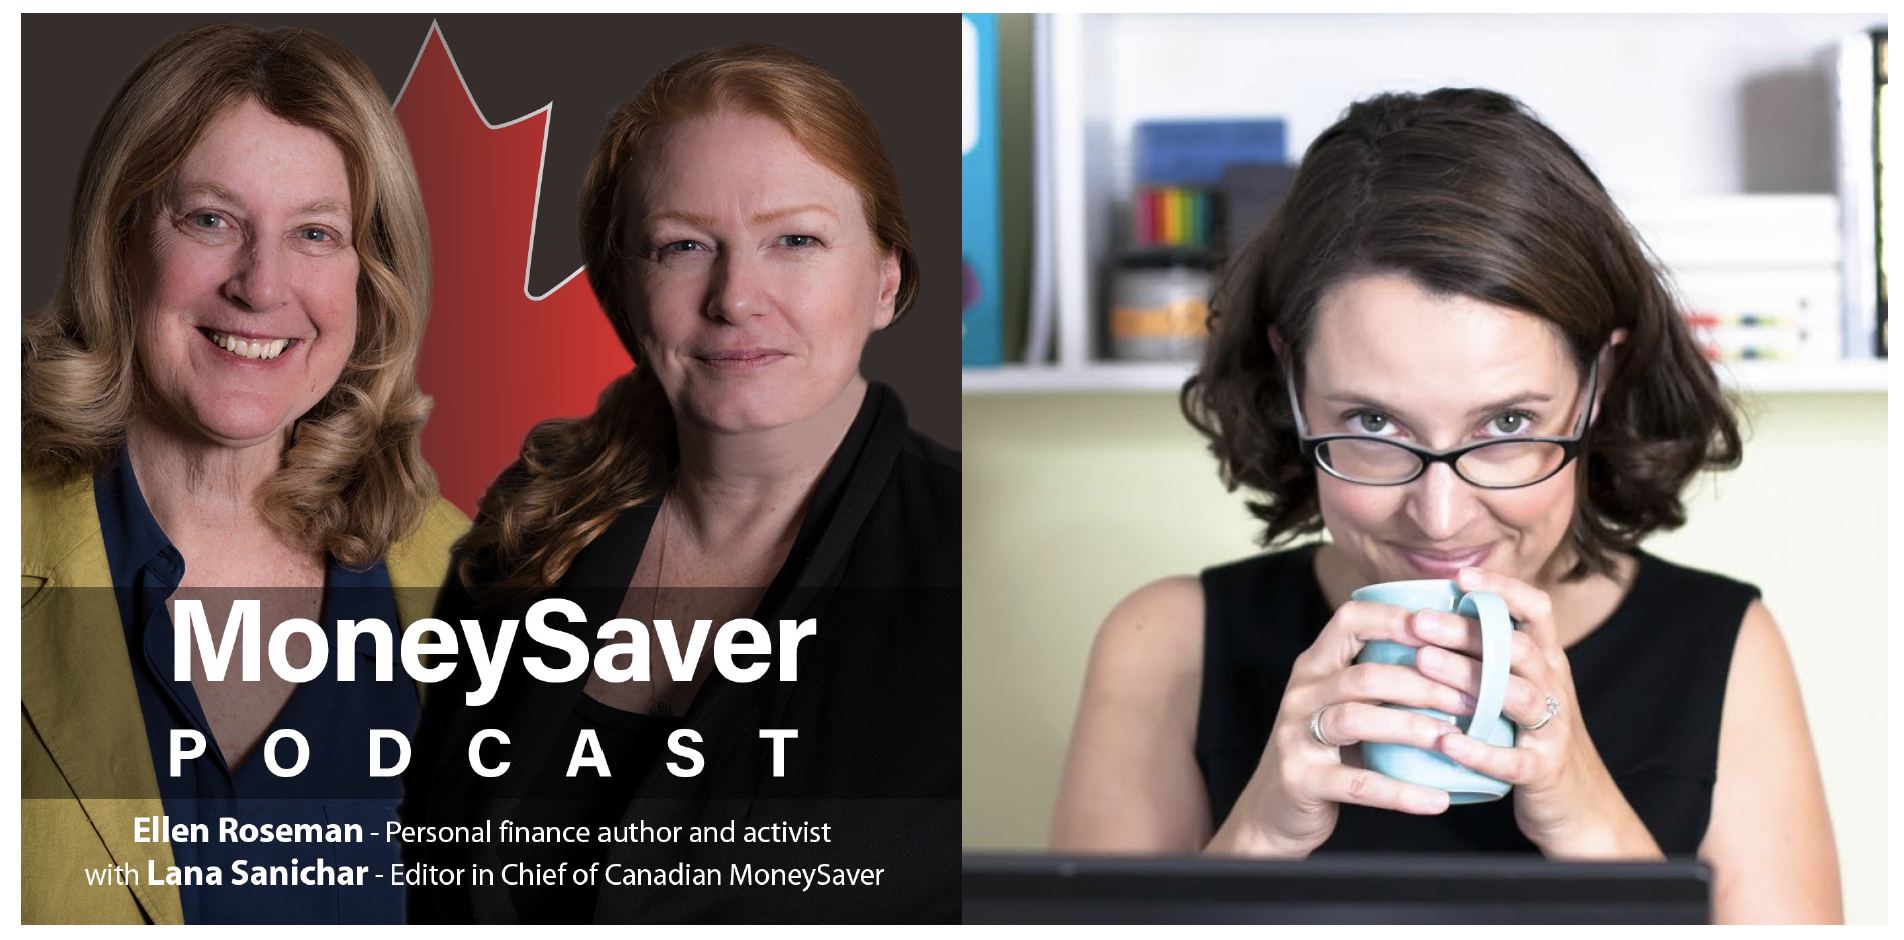 The MoneySaver Podcast with Sandi Martin